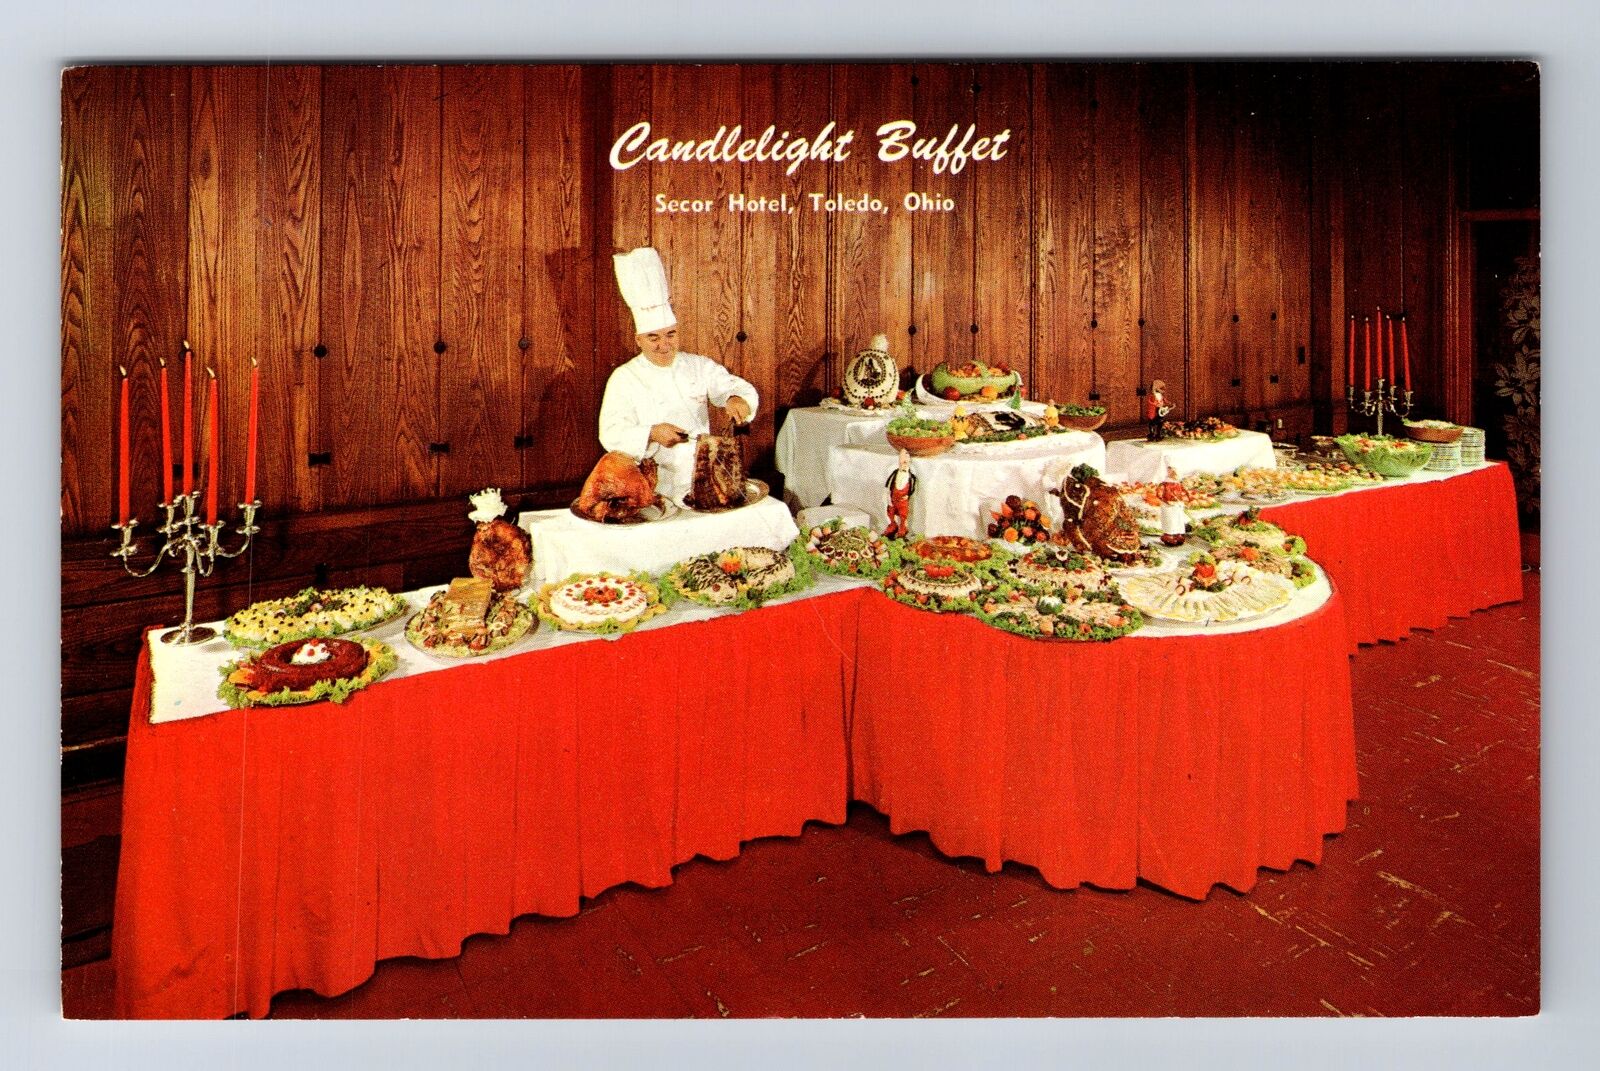 Toledo OH-Ohio, Secor Hotel Candlelight Buffet, Advertising Vintage Postcard